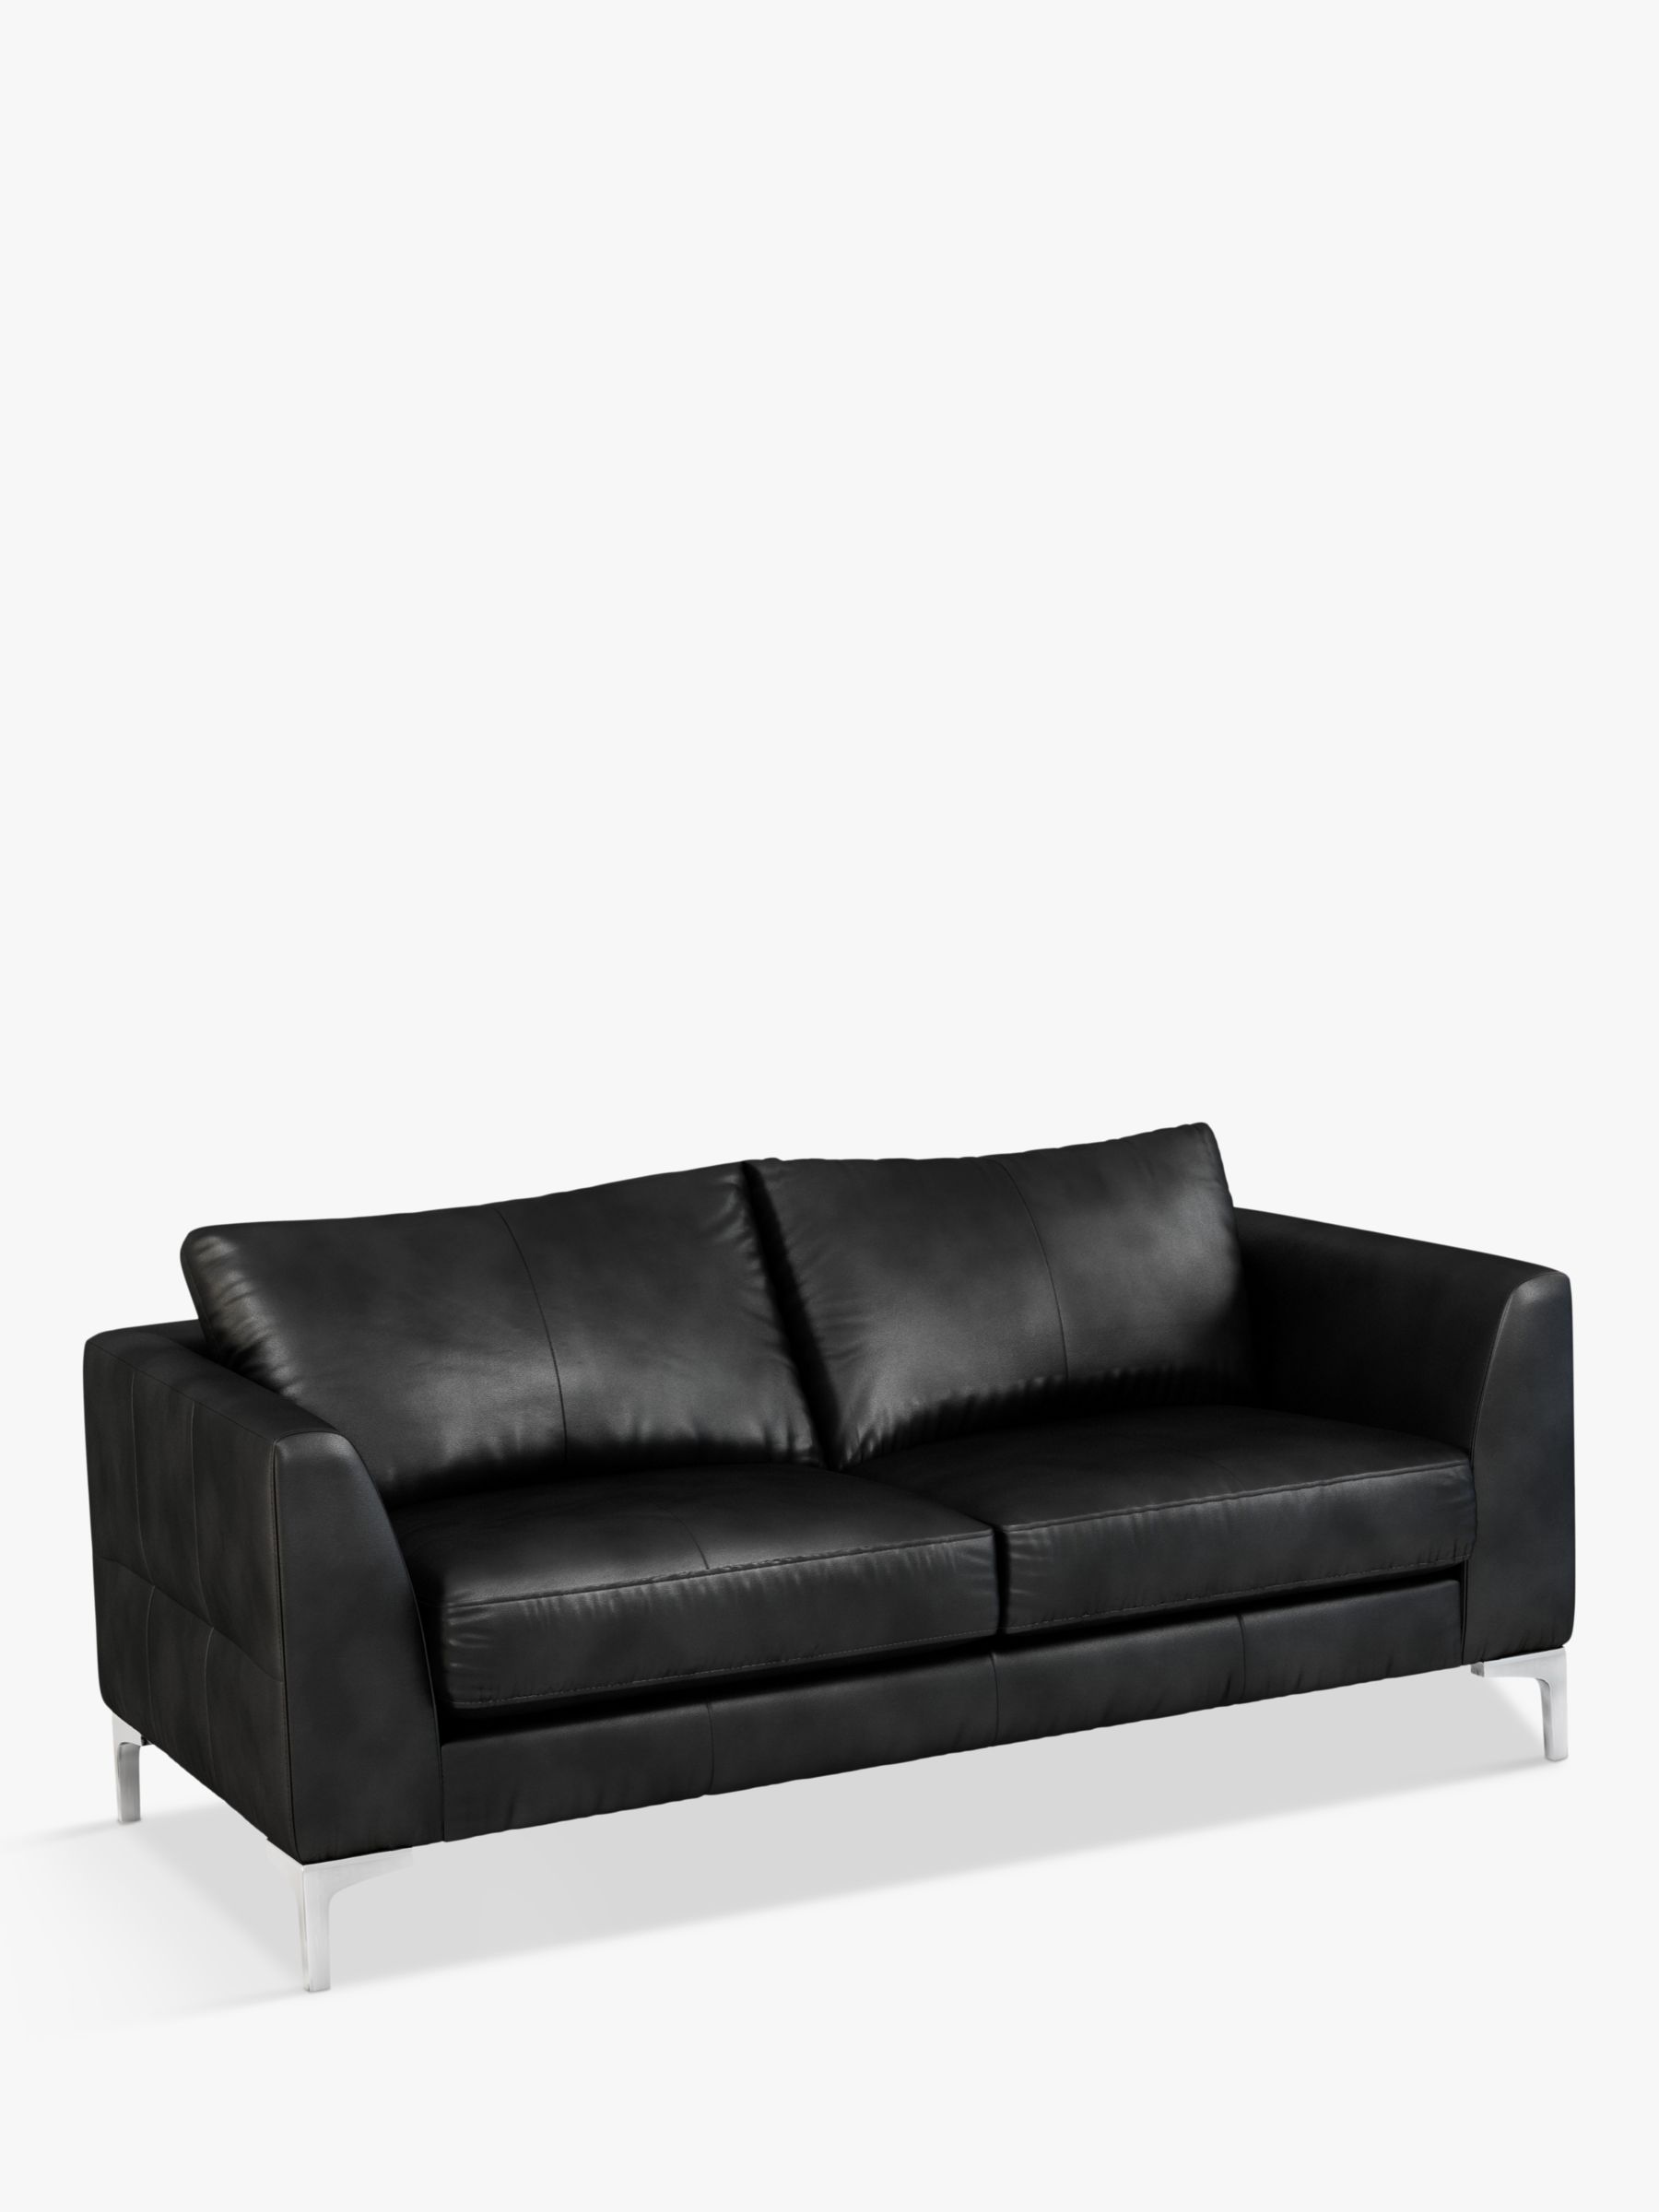 Belgrave Range, John Lewis Belgrave Medium 2 Seater Leather Sofa, Metal Leg, Contempo Black